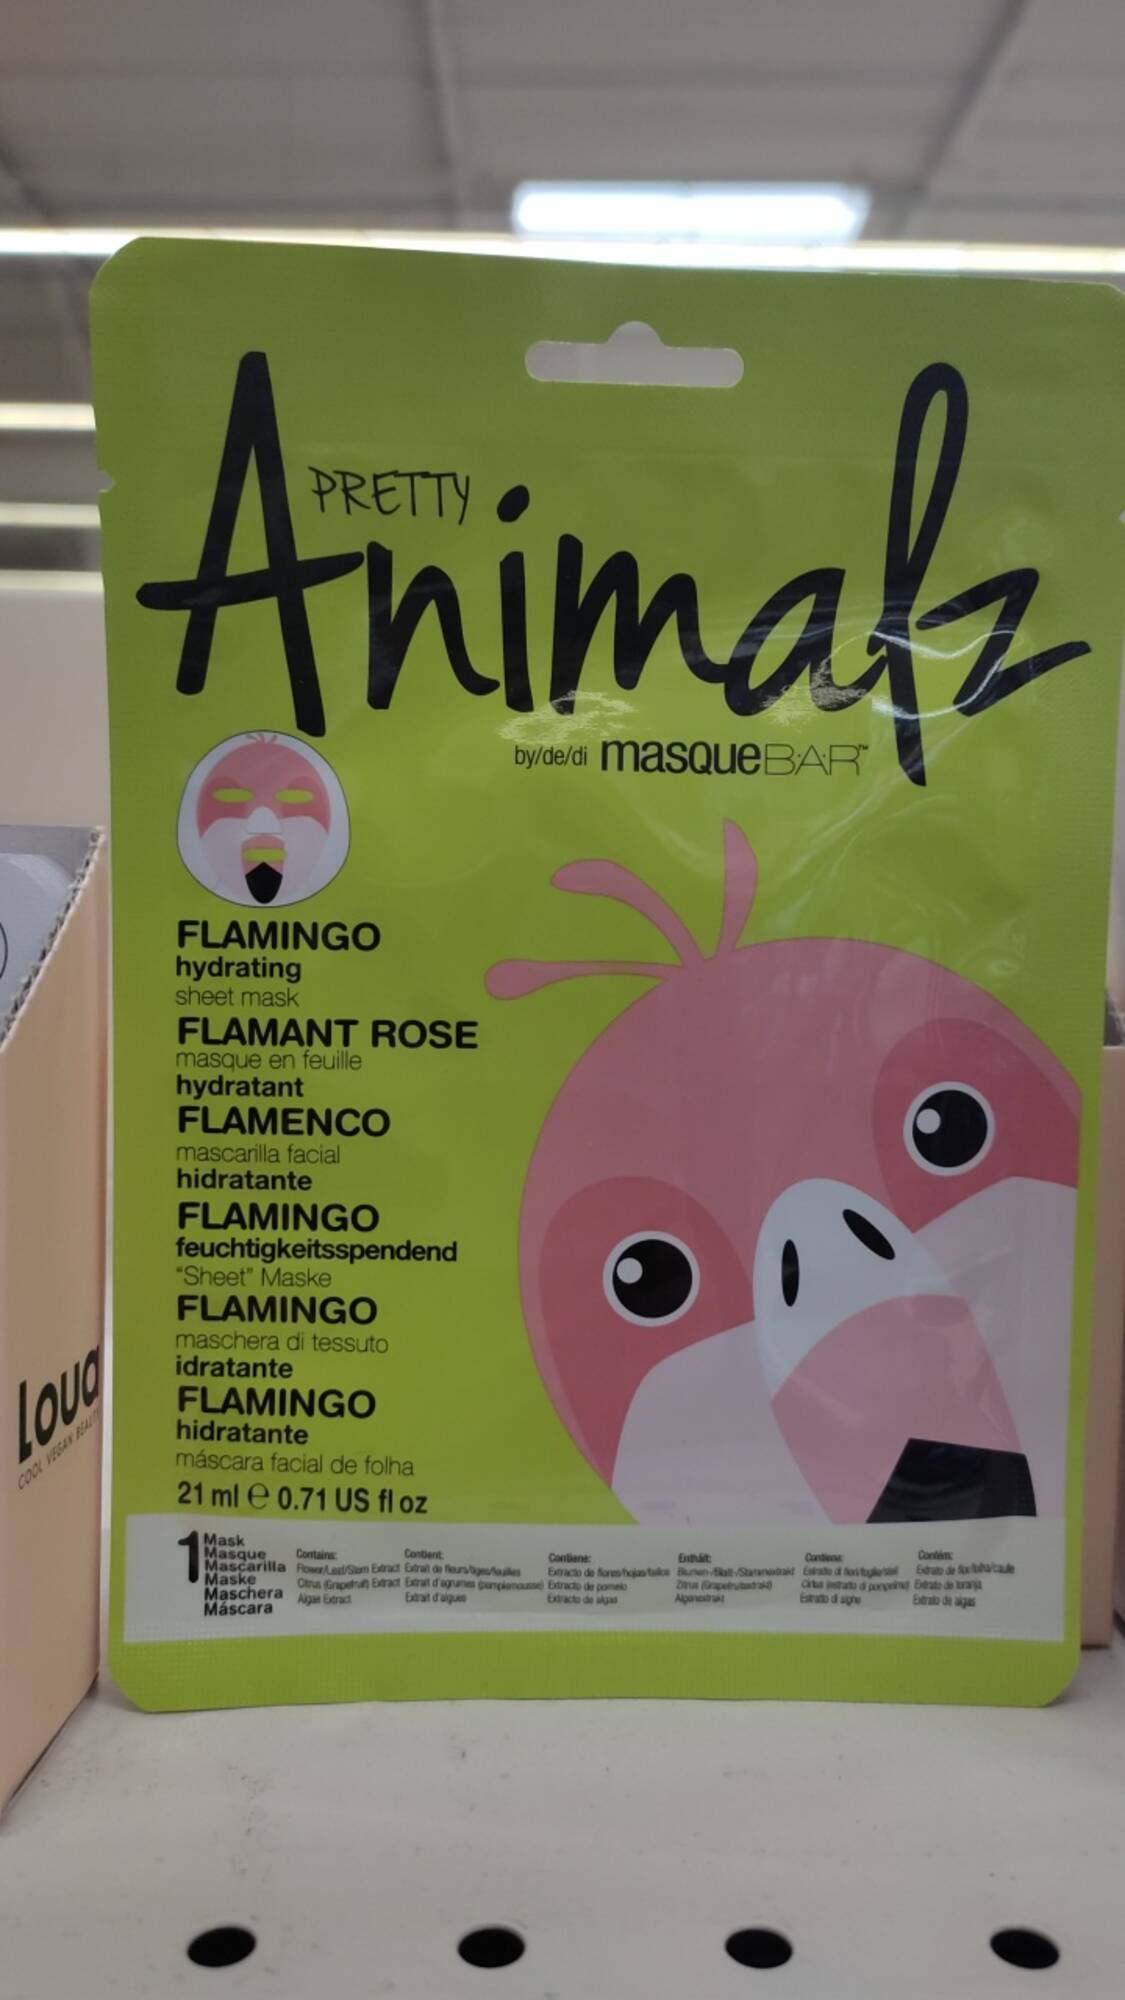 MASQUE B.A.R - Animalz - Flamant rose masque en feuille hydratant